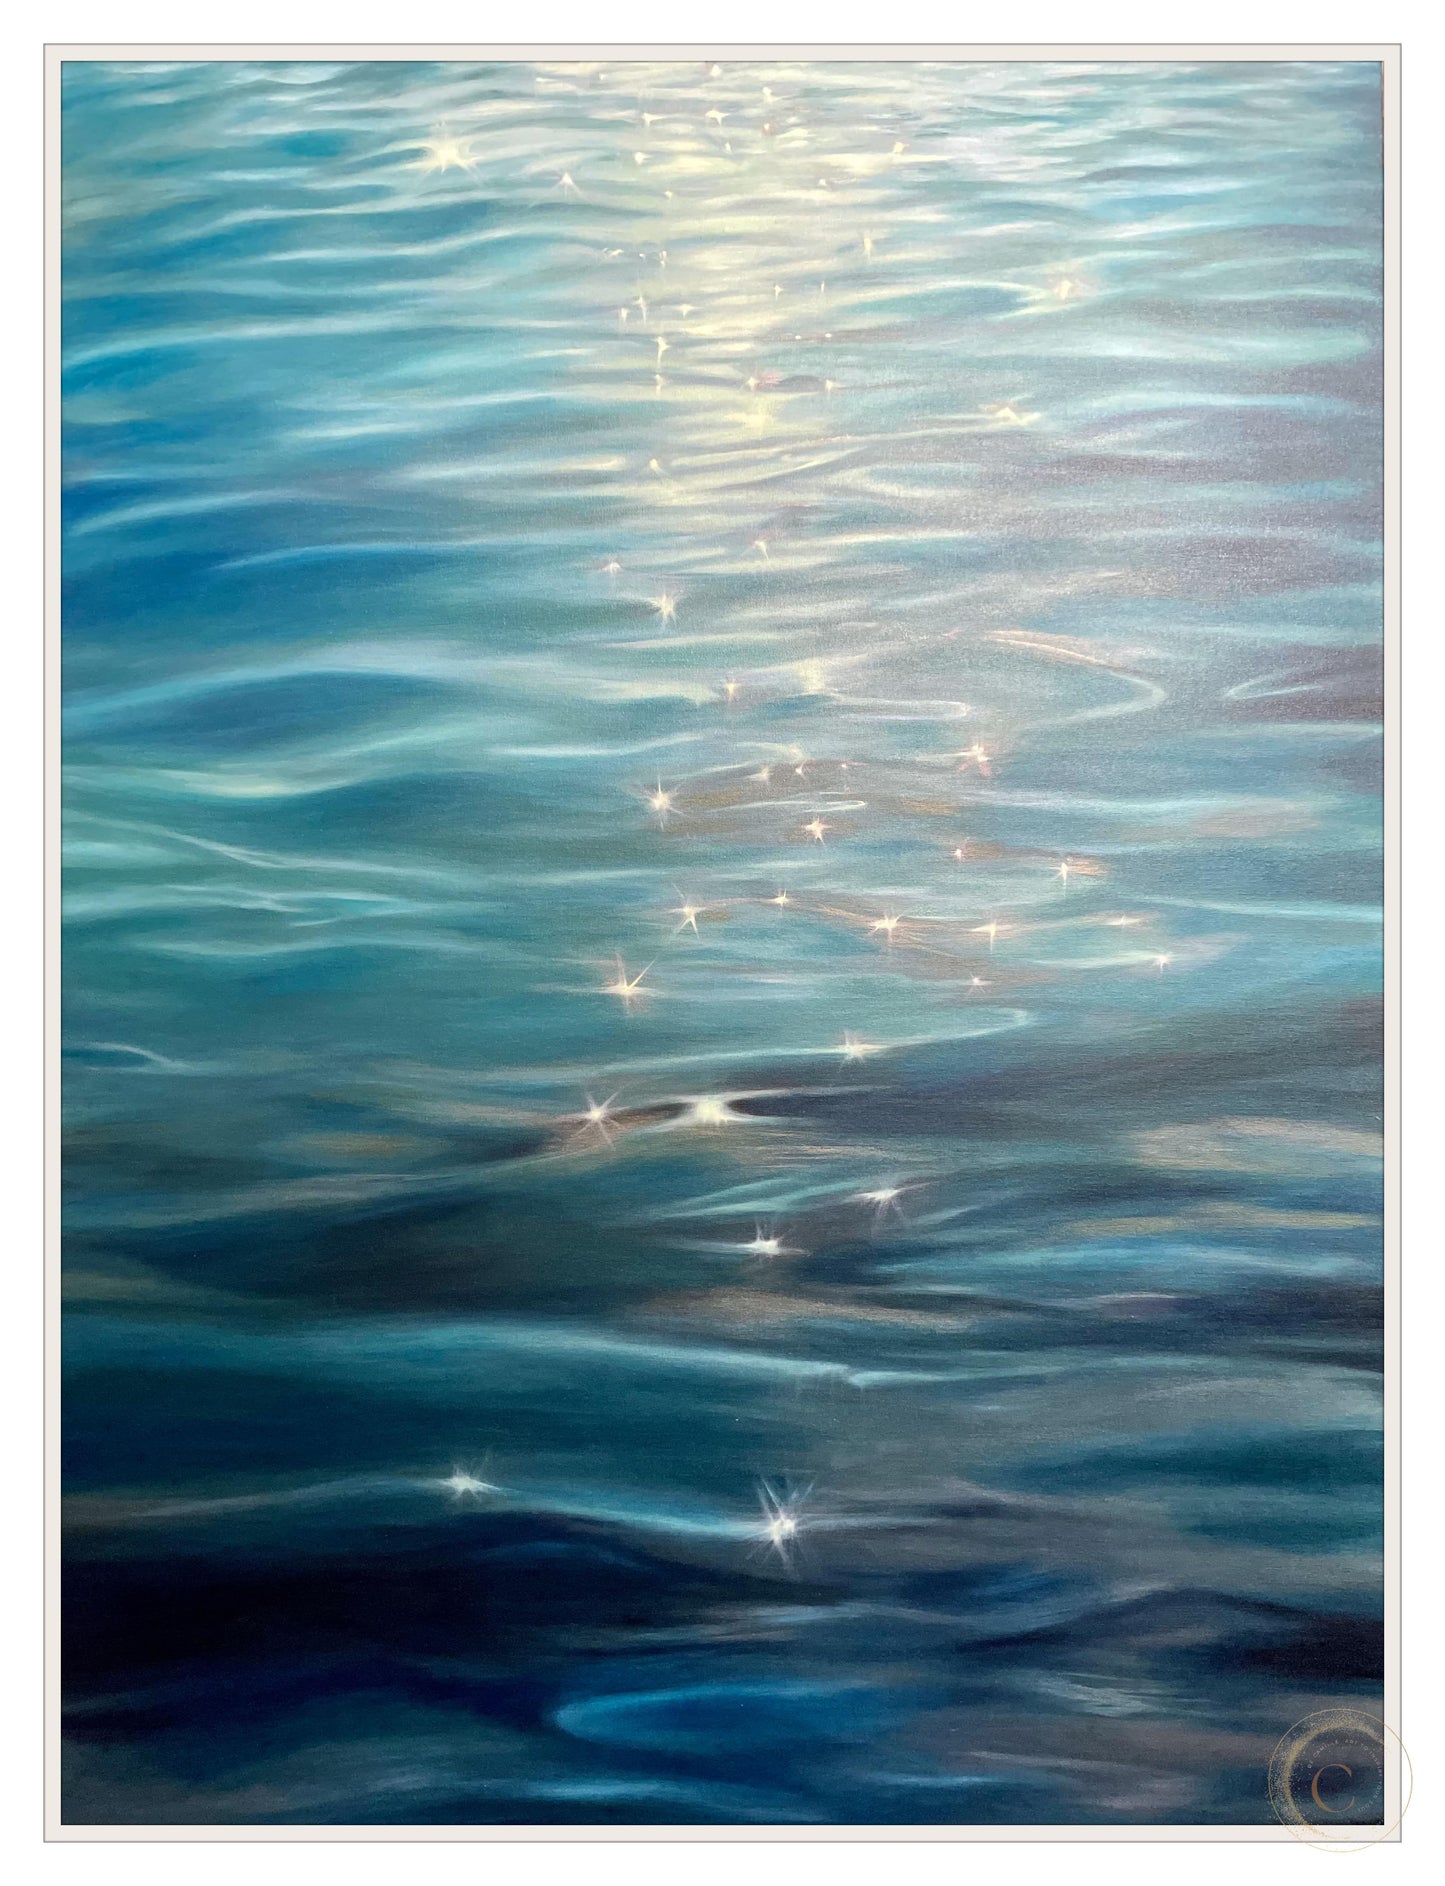 Ocean Bliss 6 Canvas Print